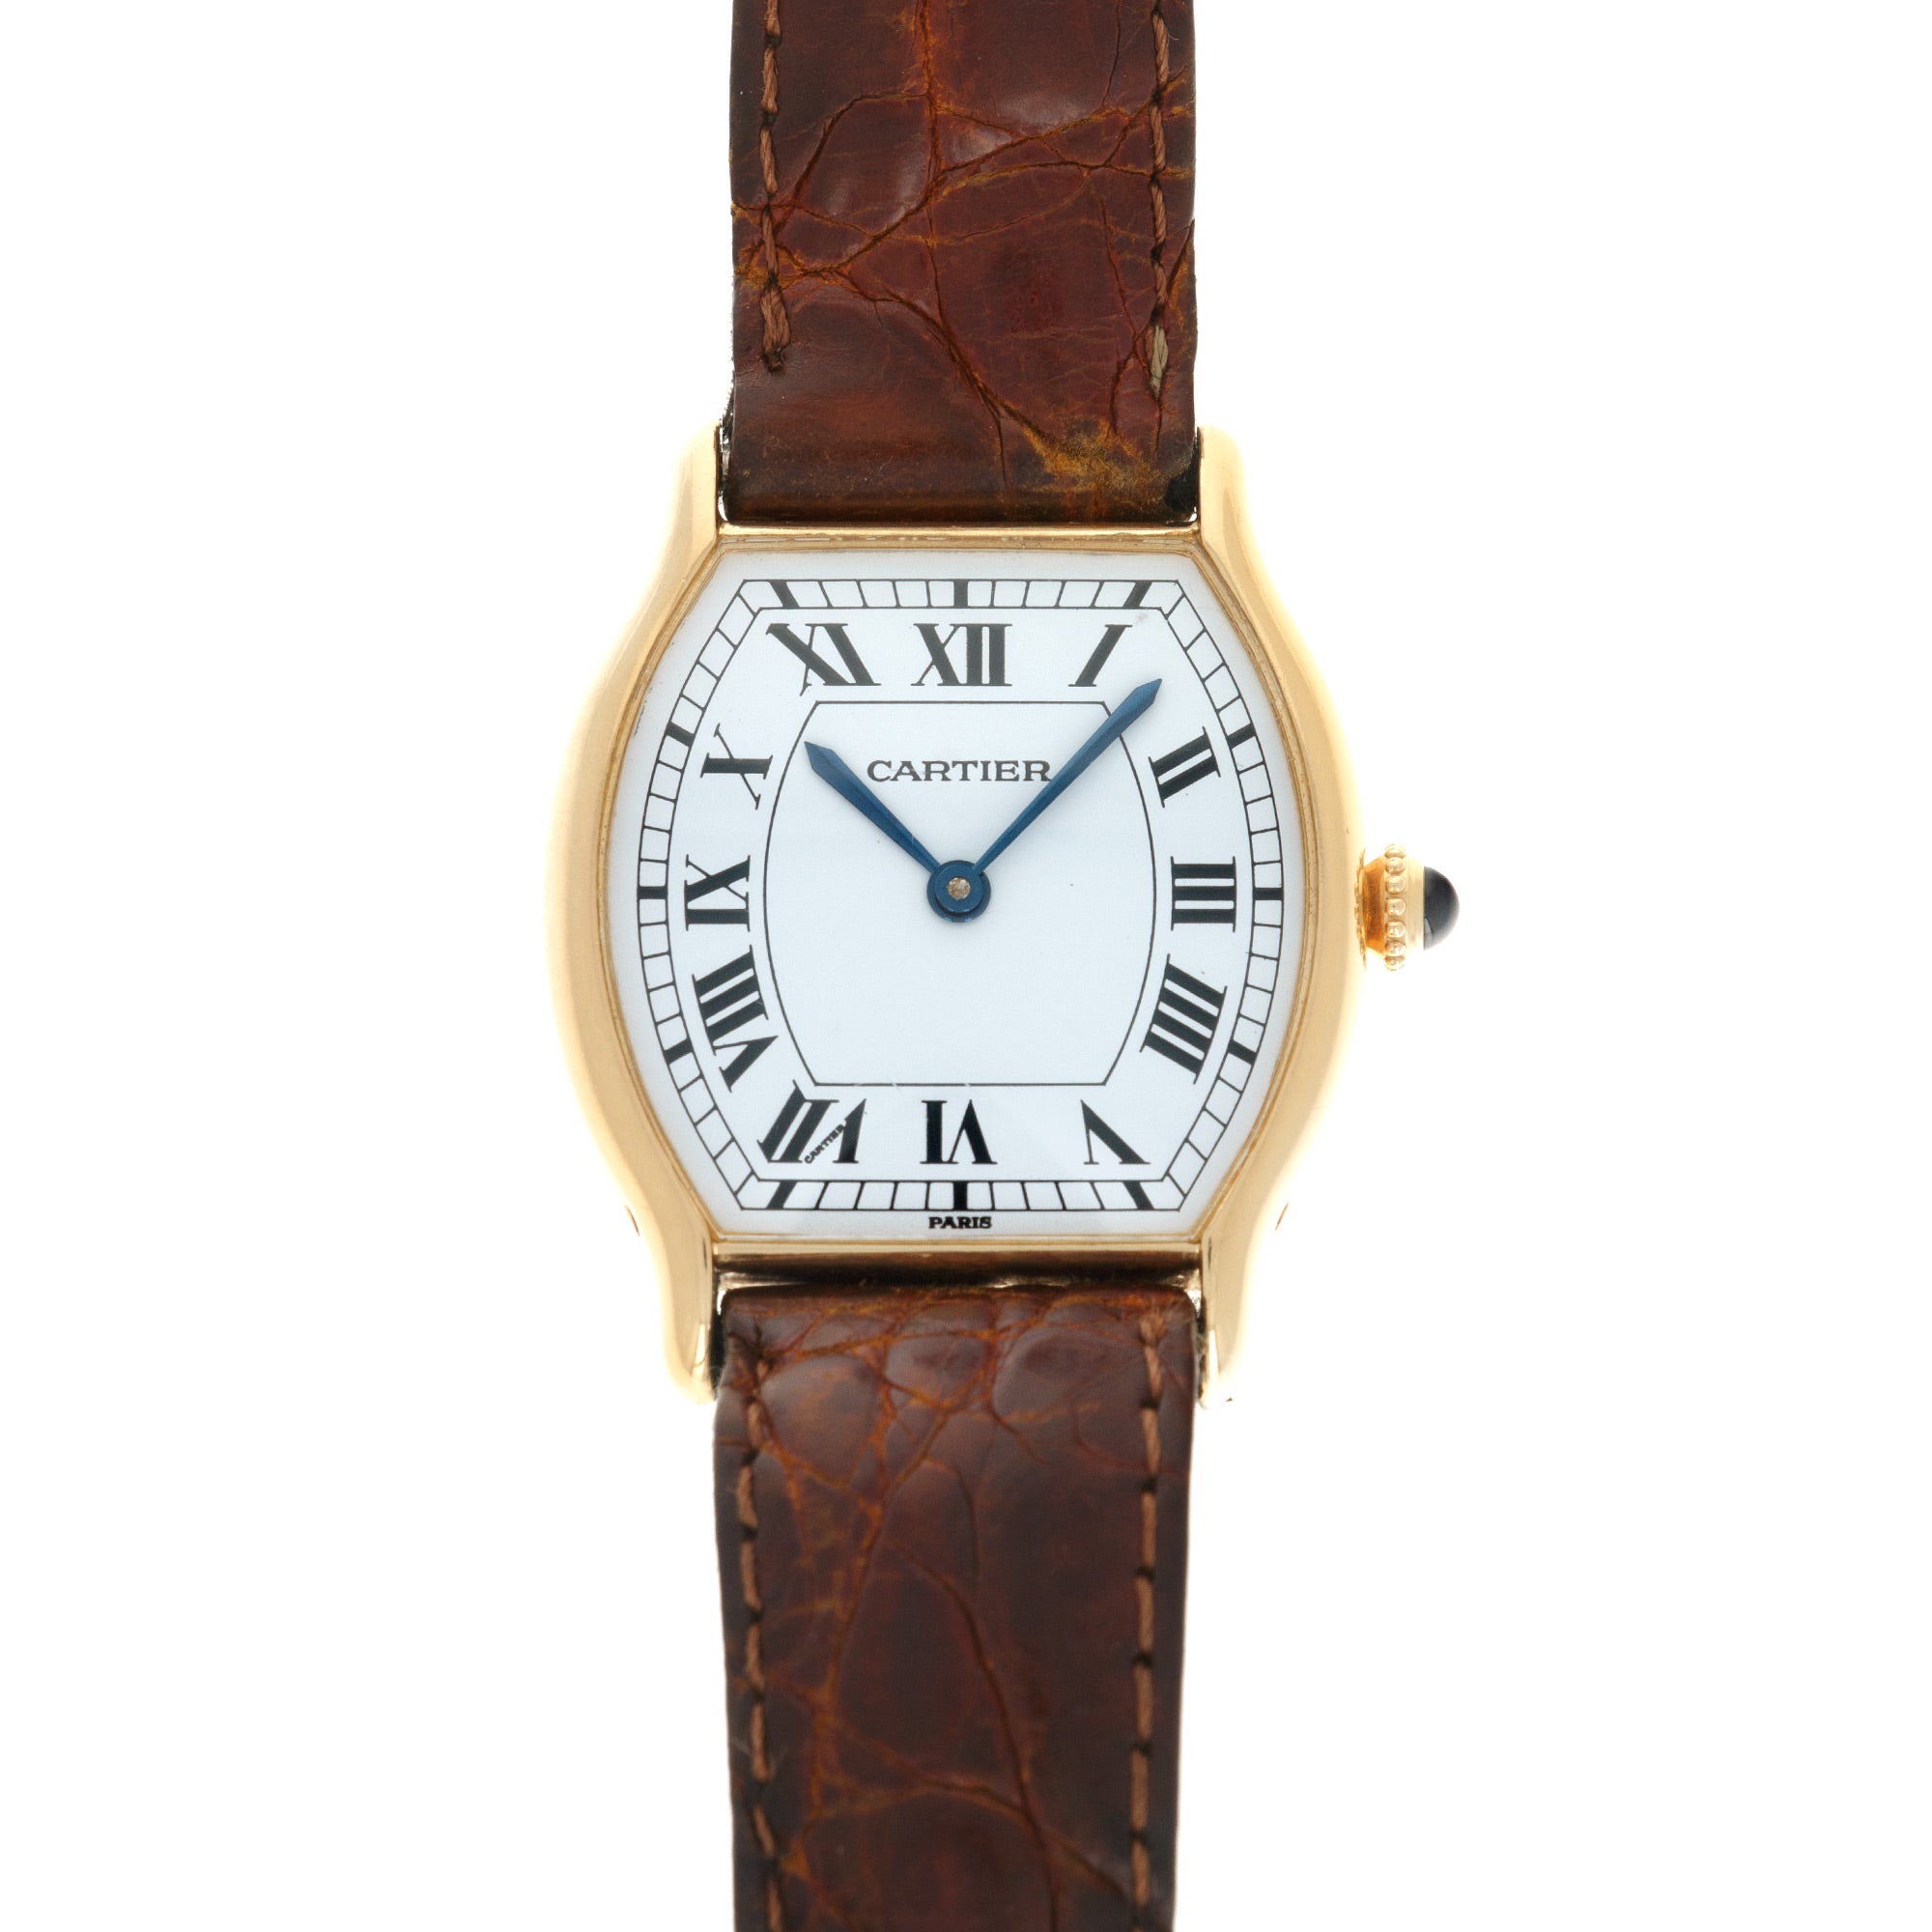 Cartier - Cartier Yellow Gold Tortue Watch, Circa 1970s - The Keystone Watches